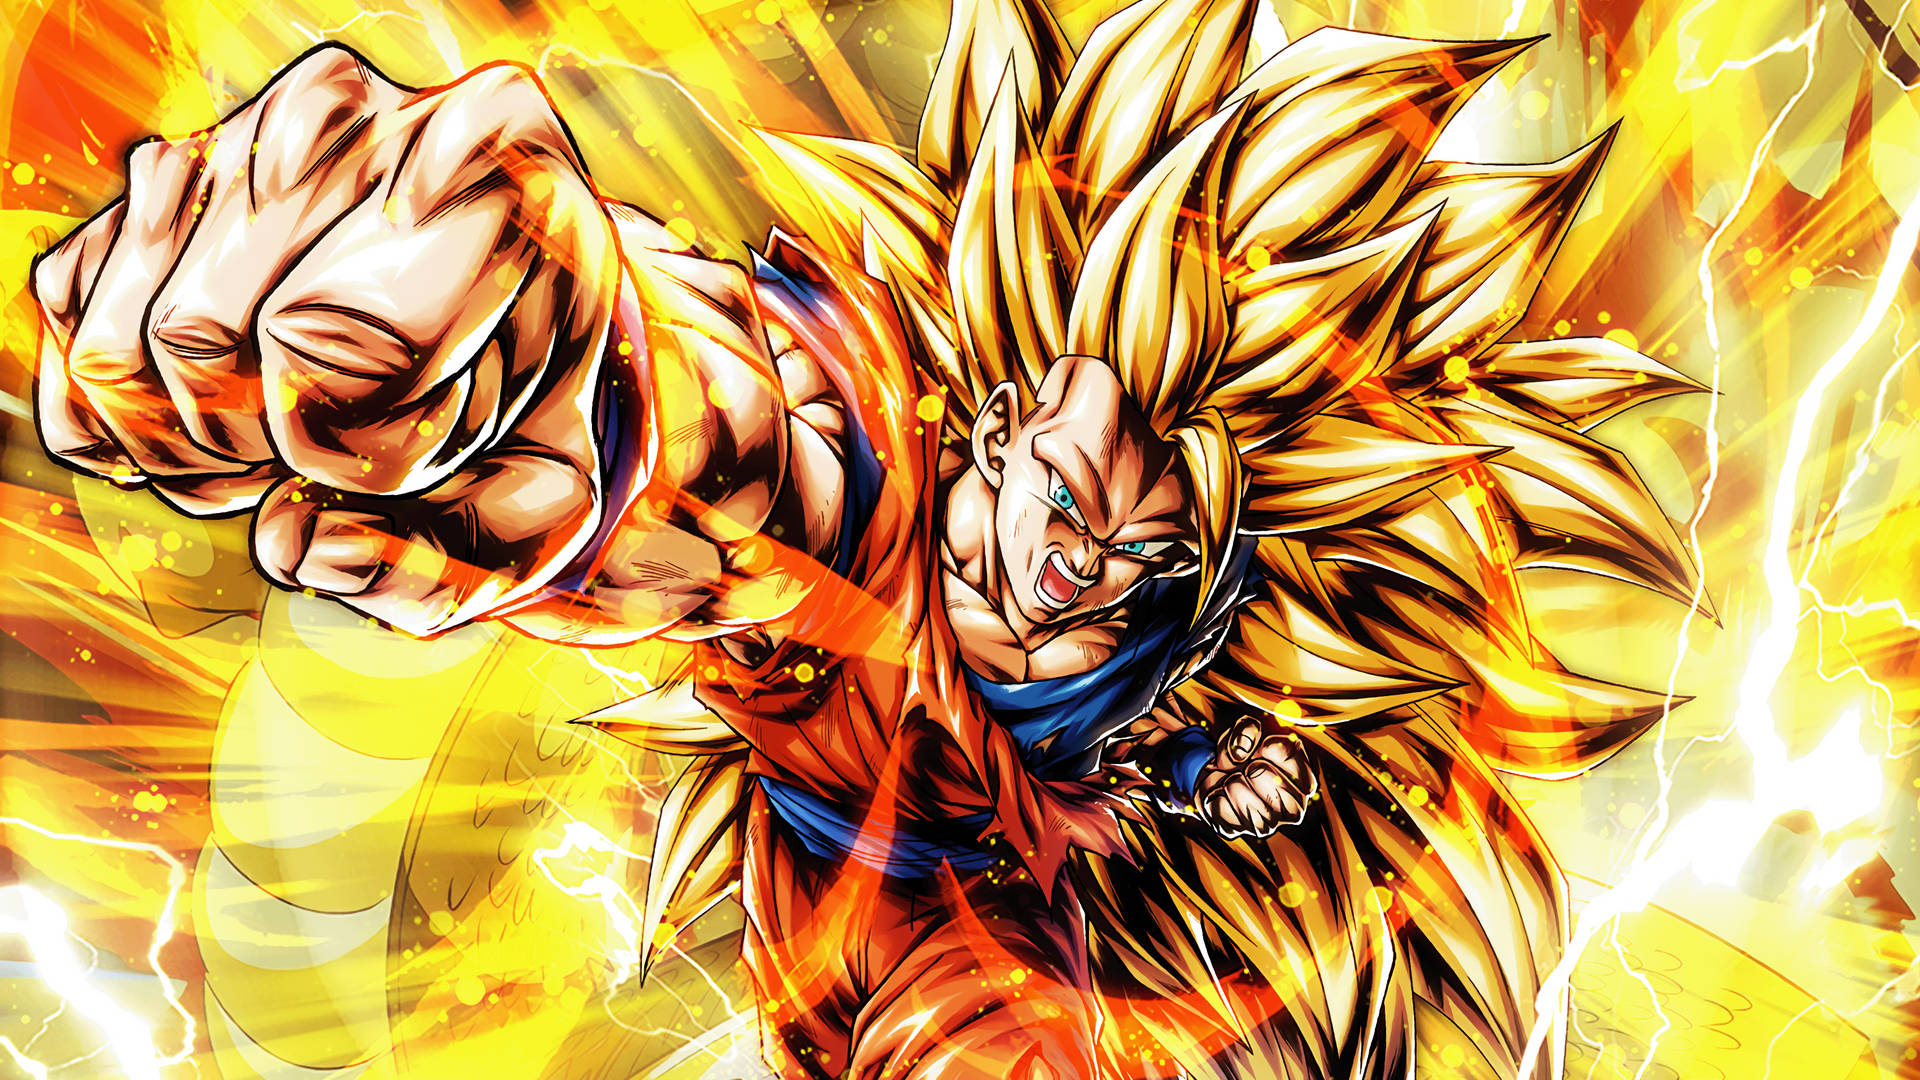 Goku Wallpaper : Dragon Ball, 4K, QHD & Gifs Apk Download for